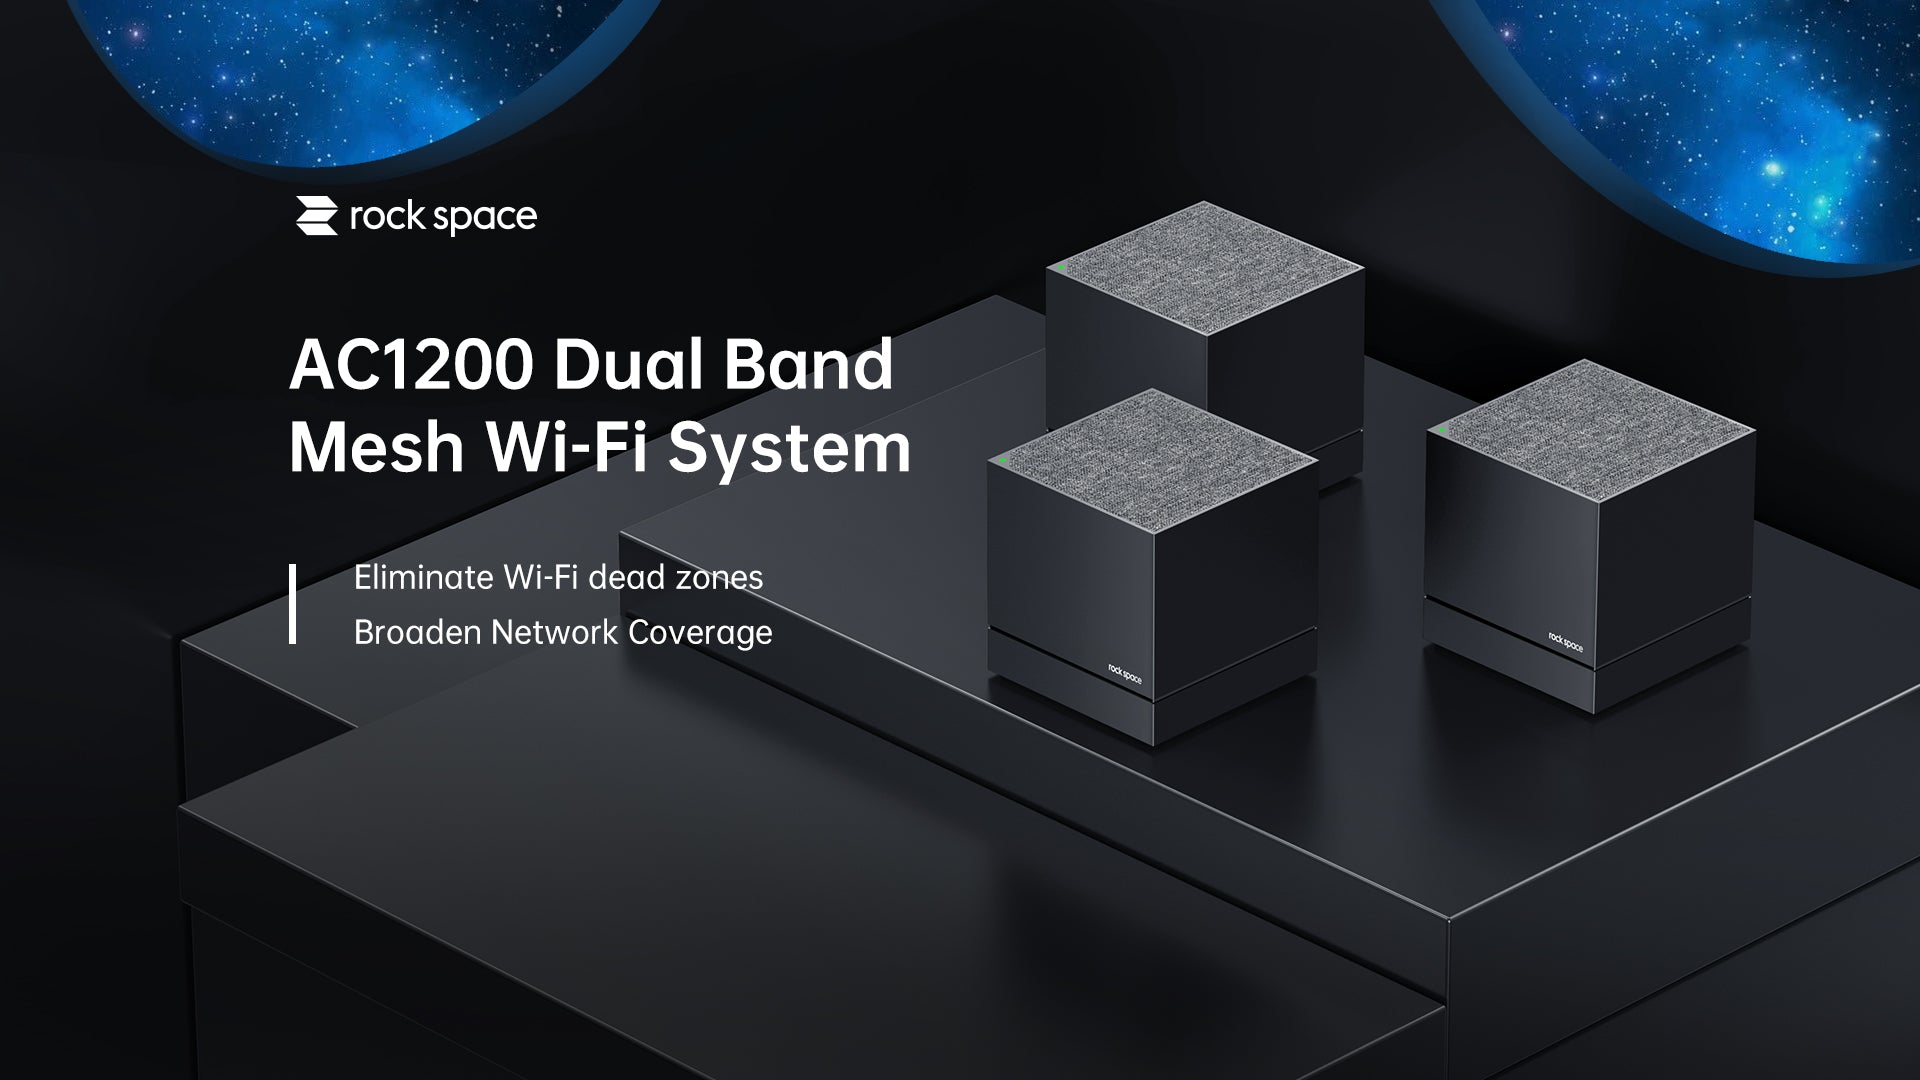 AC1200 dual band mesh Wi-Fi system